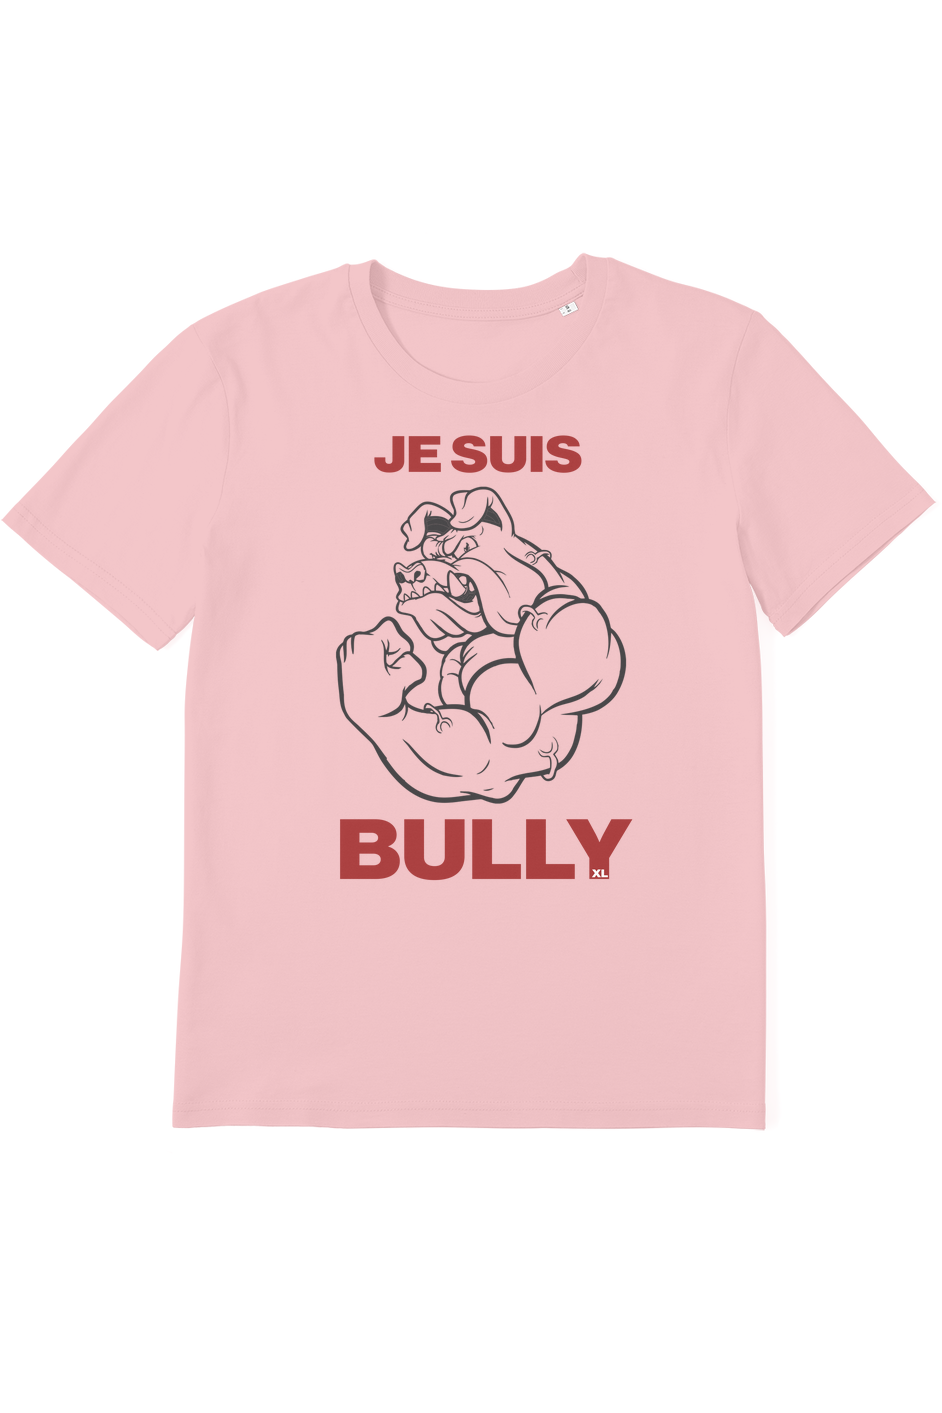 Je Suis Bully Organic T-Shirt vegan, sustainable, organic streetwear, - TRVTH ORGANIC CLOTHING